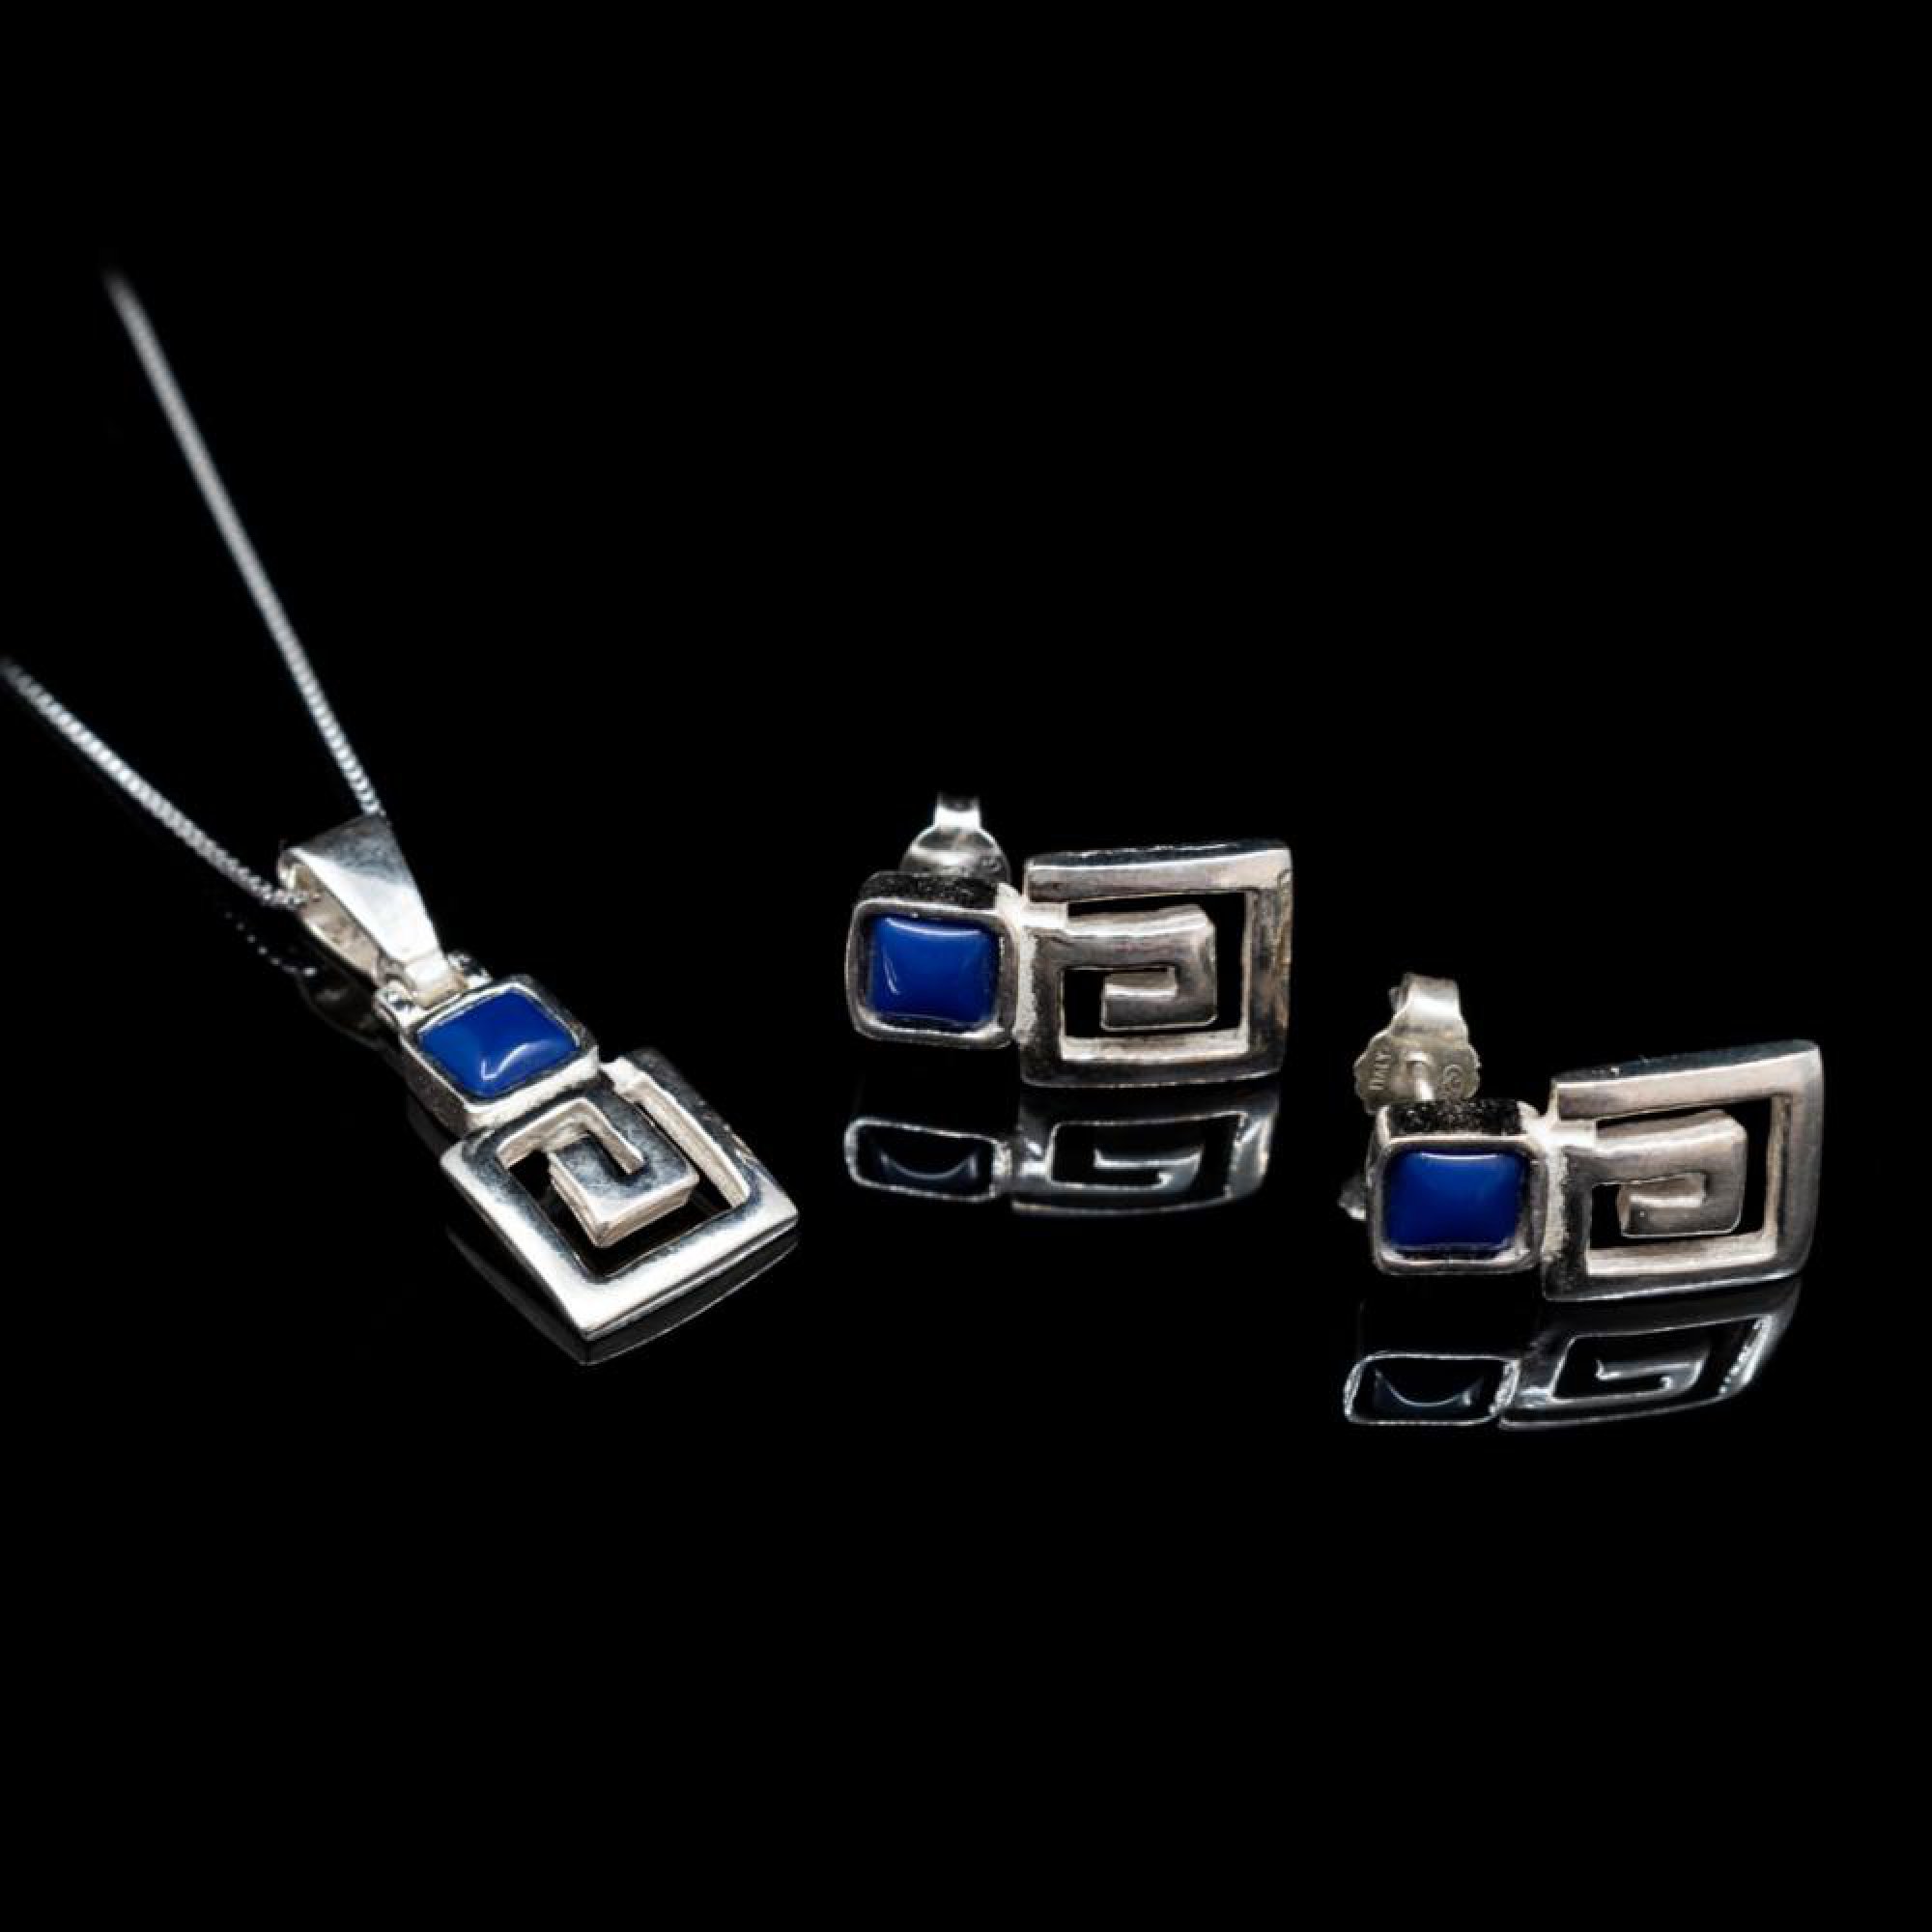 Meander set with lapis lazuli stones